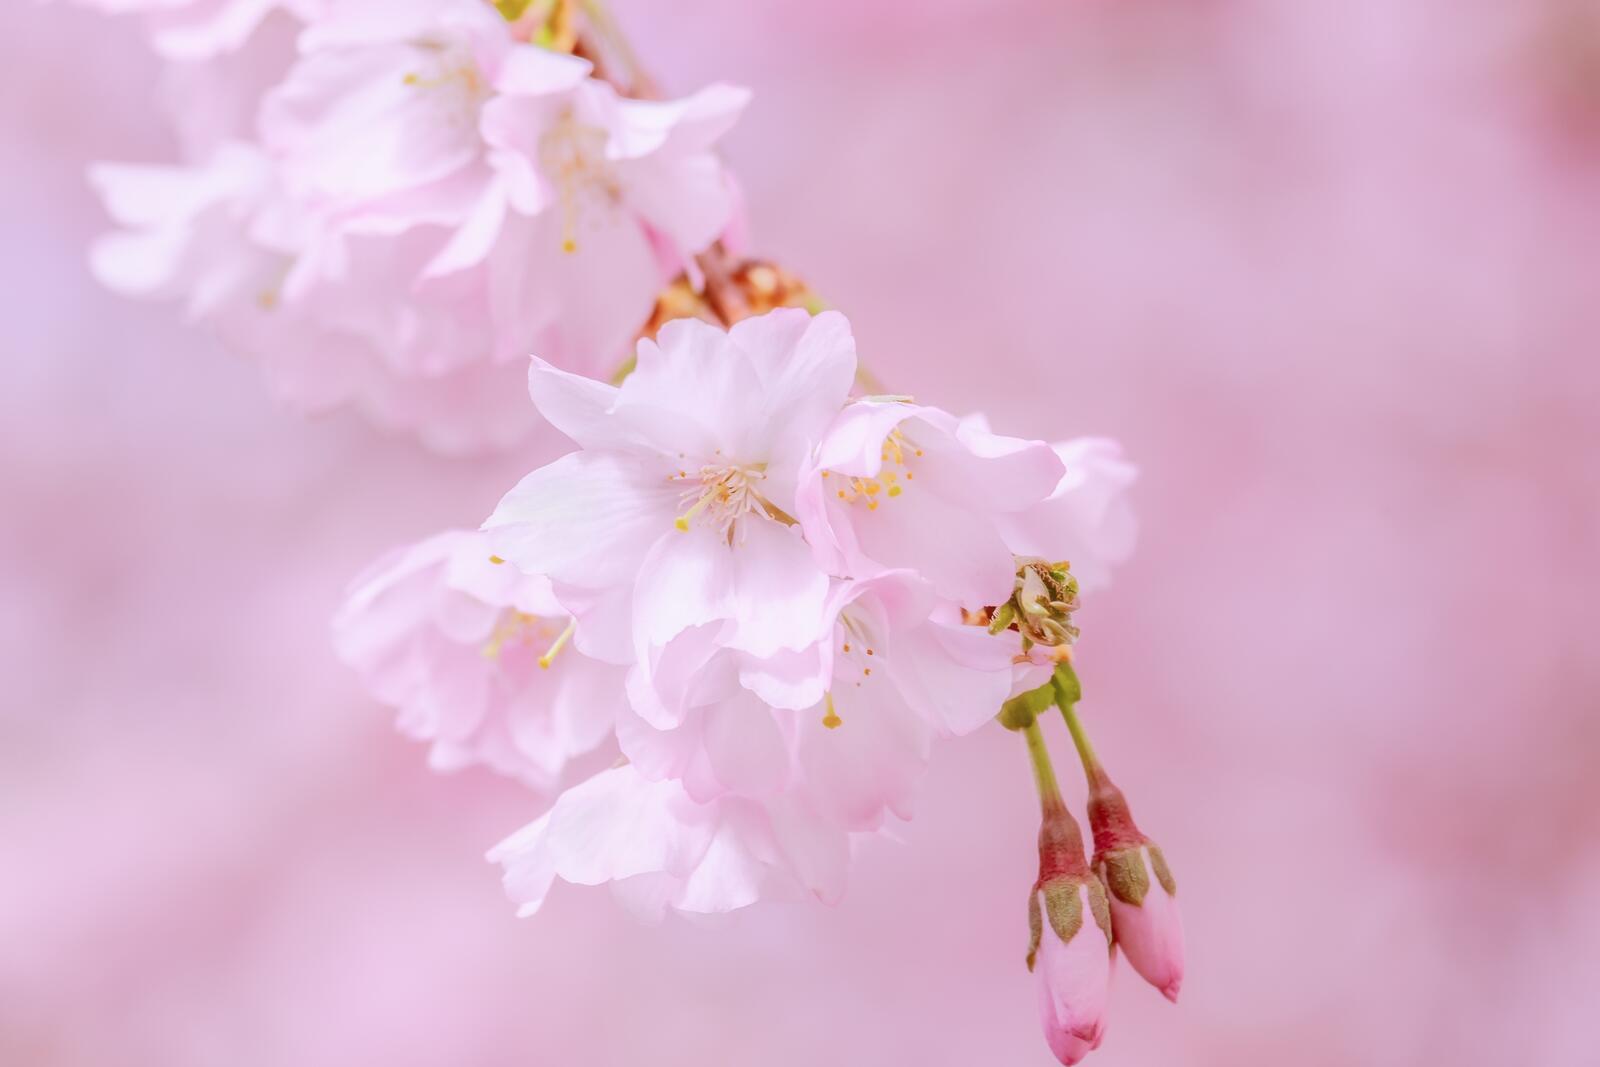 Wallpapers wallpaper sakura blossom spring cherry blossom on the desktop